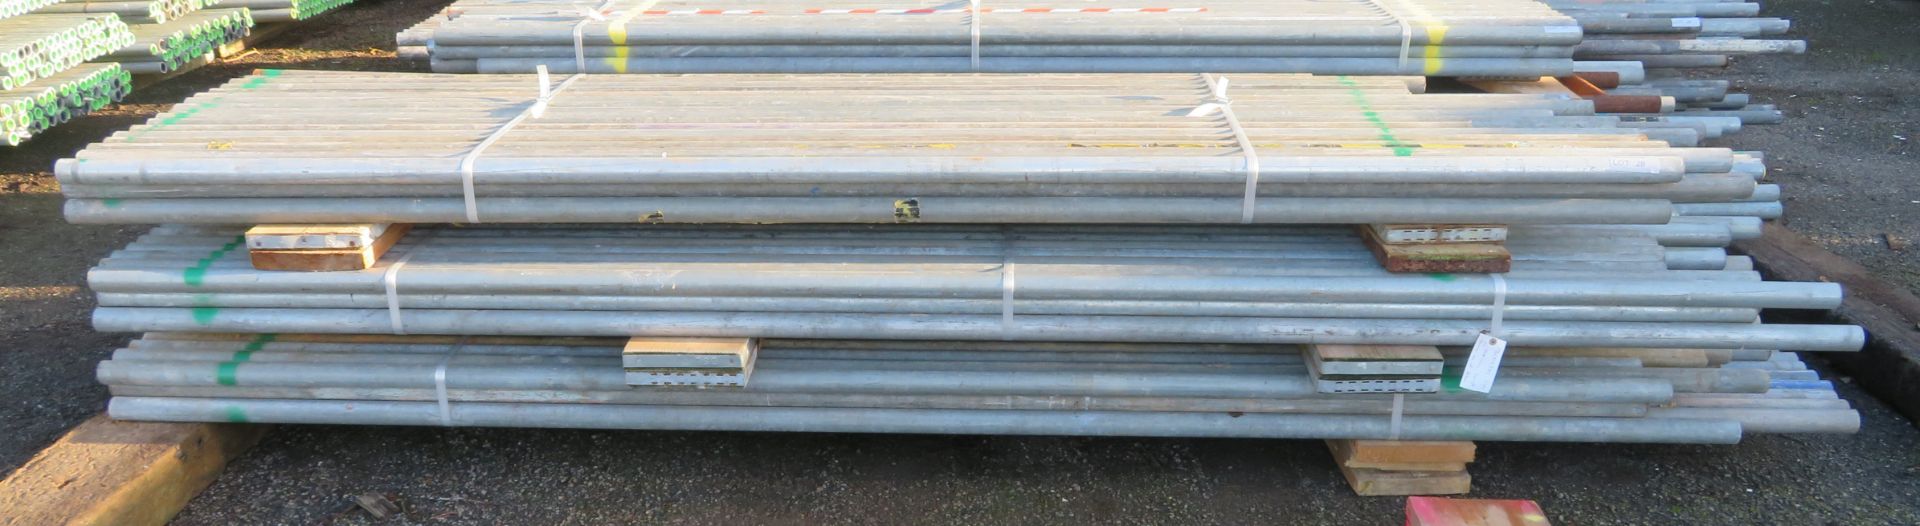 150x Various Length Galvanised Steel Scaffolding Poles. Lengths Range Between 11.5ft - 8ft.